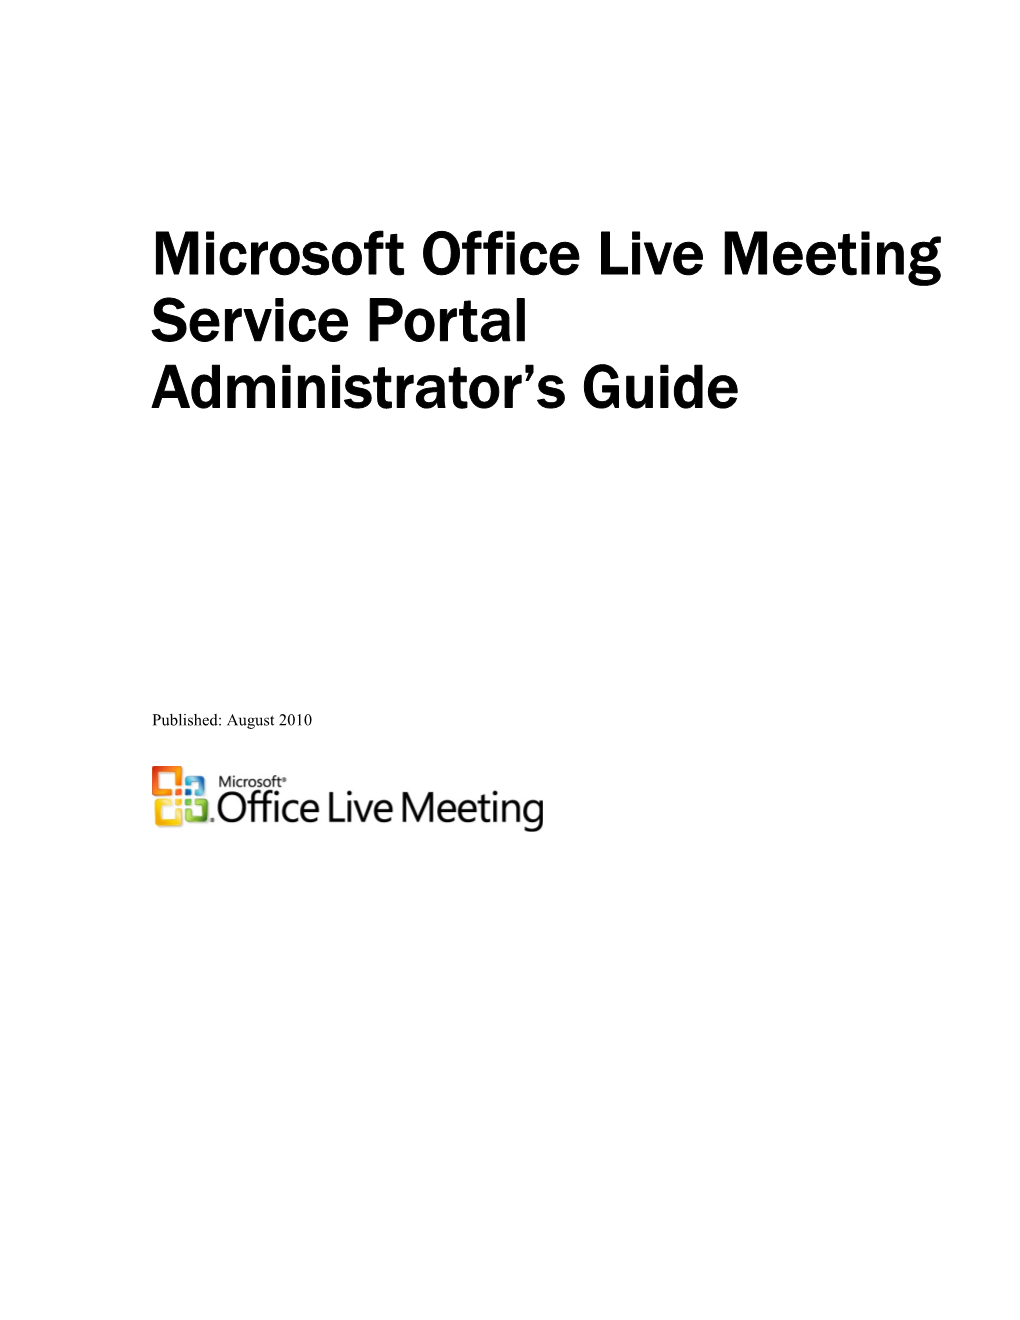 Microsoft Office Live Meeting Service Portal